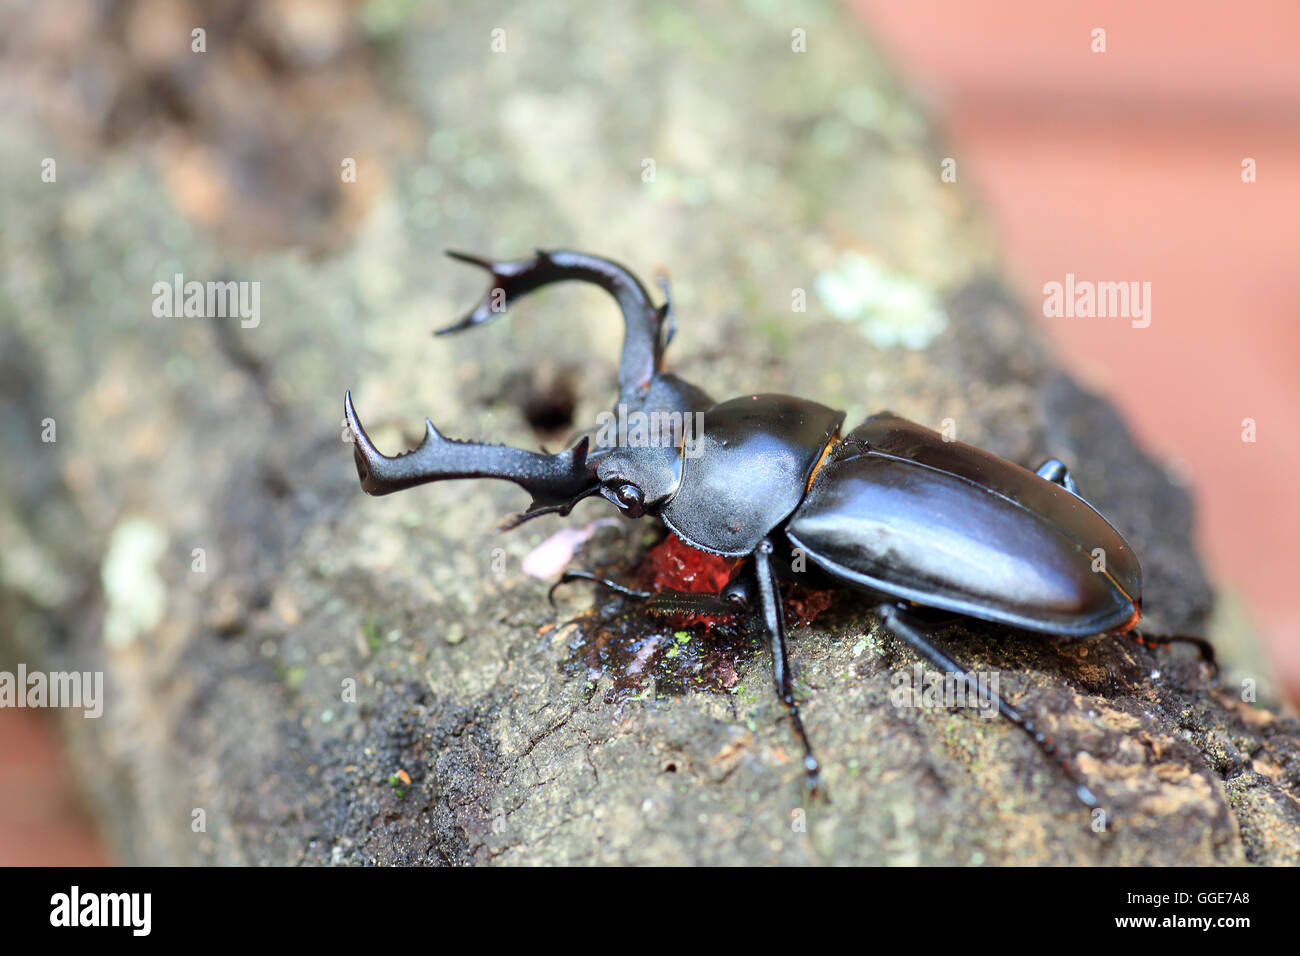 Rhaetulus crenatus crenatus stag beetle in Taiwan Stock Photo